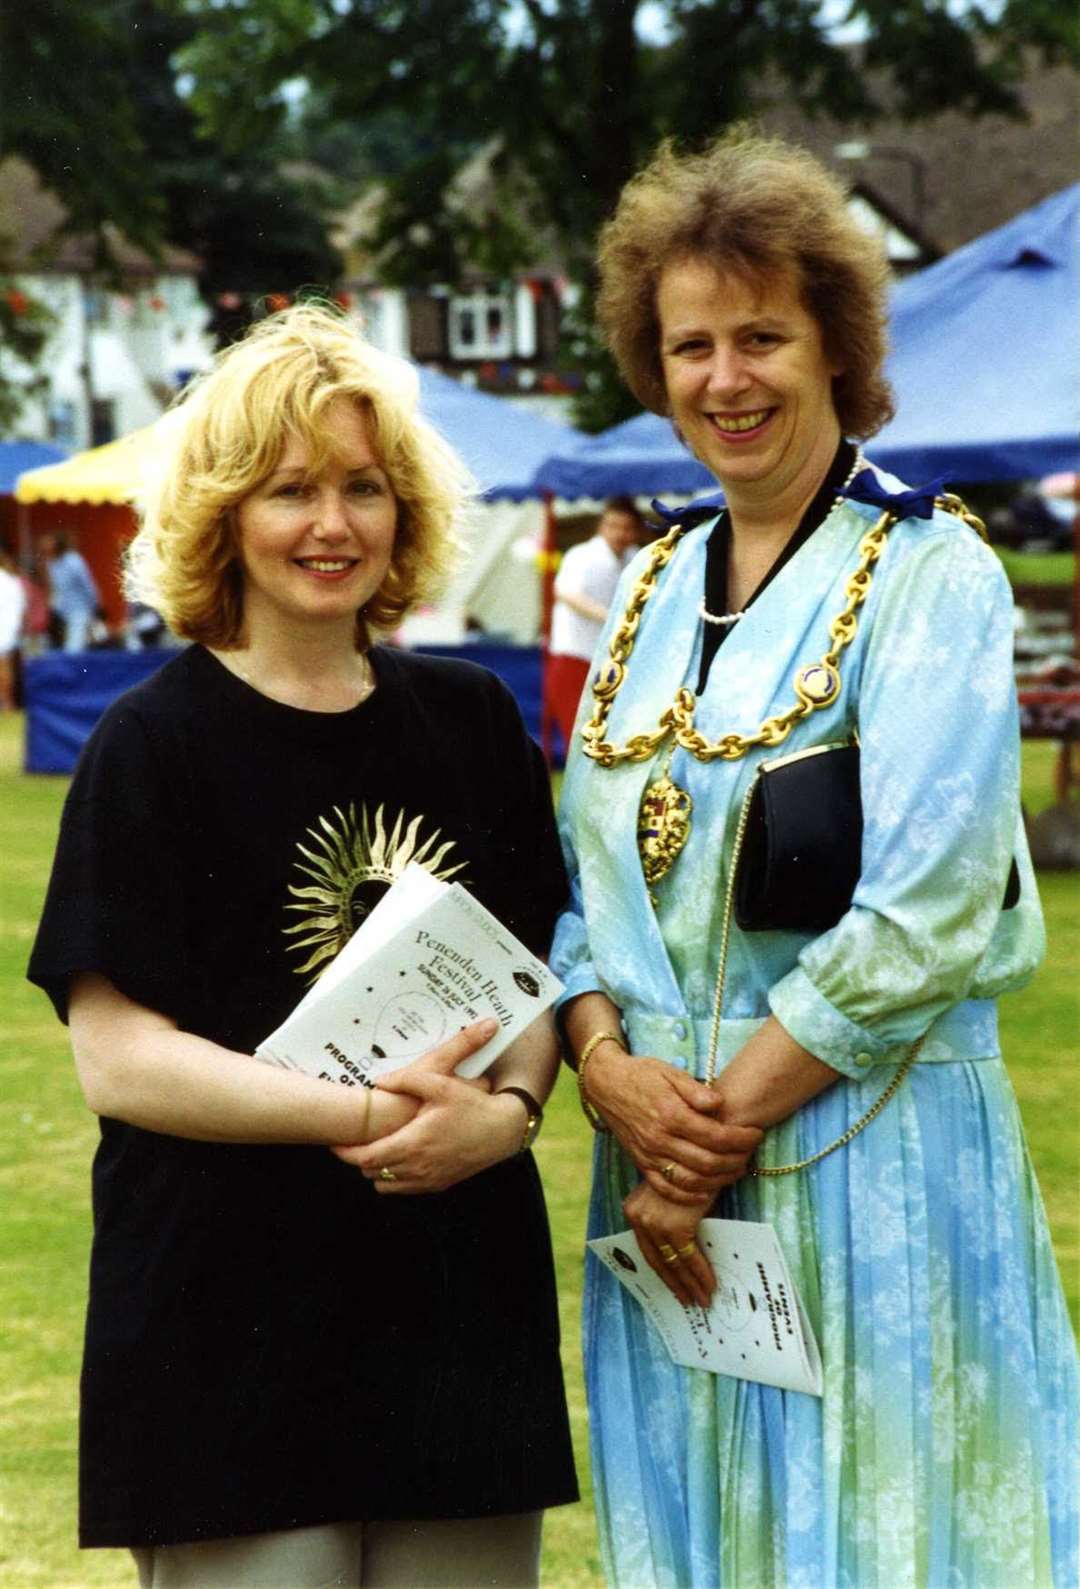 Gillian Gibson, organiser of the Penenden Heath Festival with the Mayoress of Maidstone Cllr Madeleine Blackham